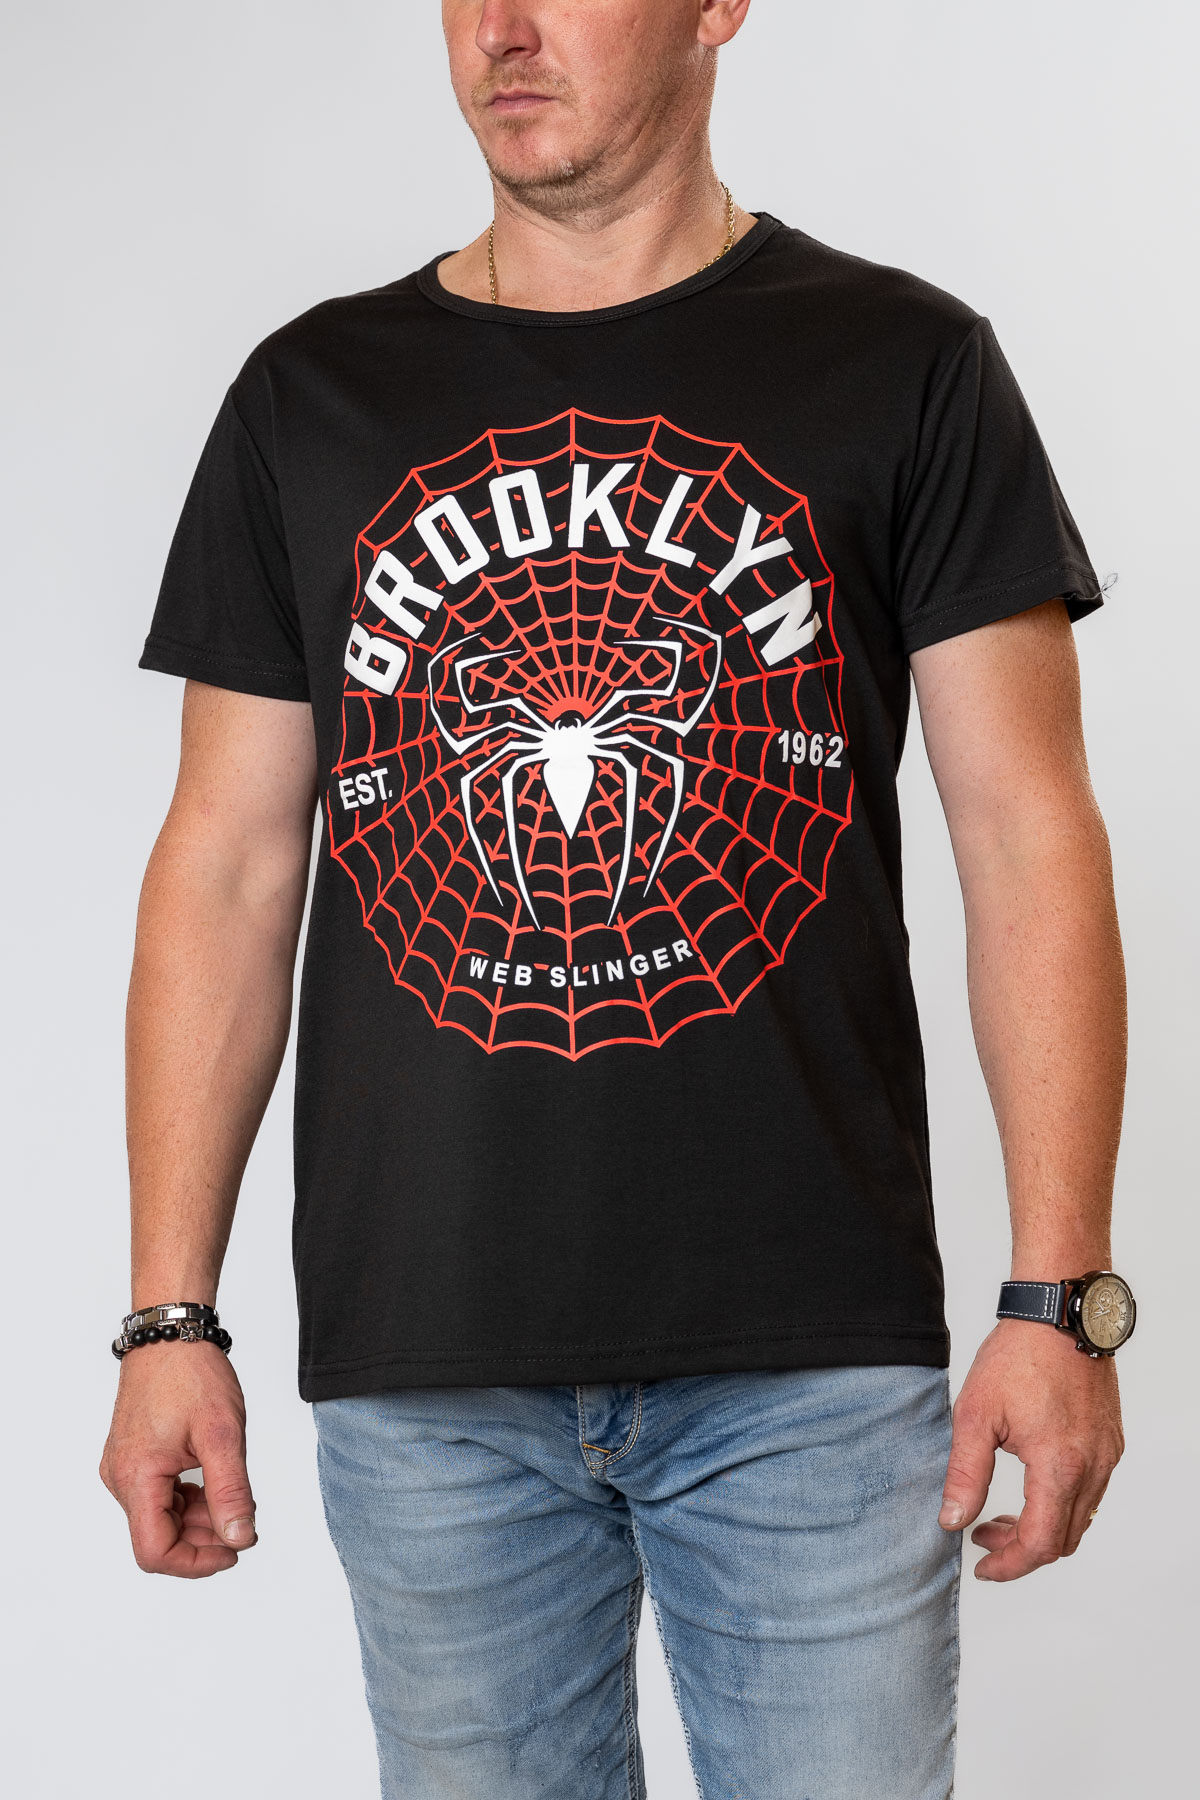 Pánske tričko BROOKLYN WEB SLINGER - čierne